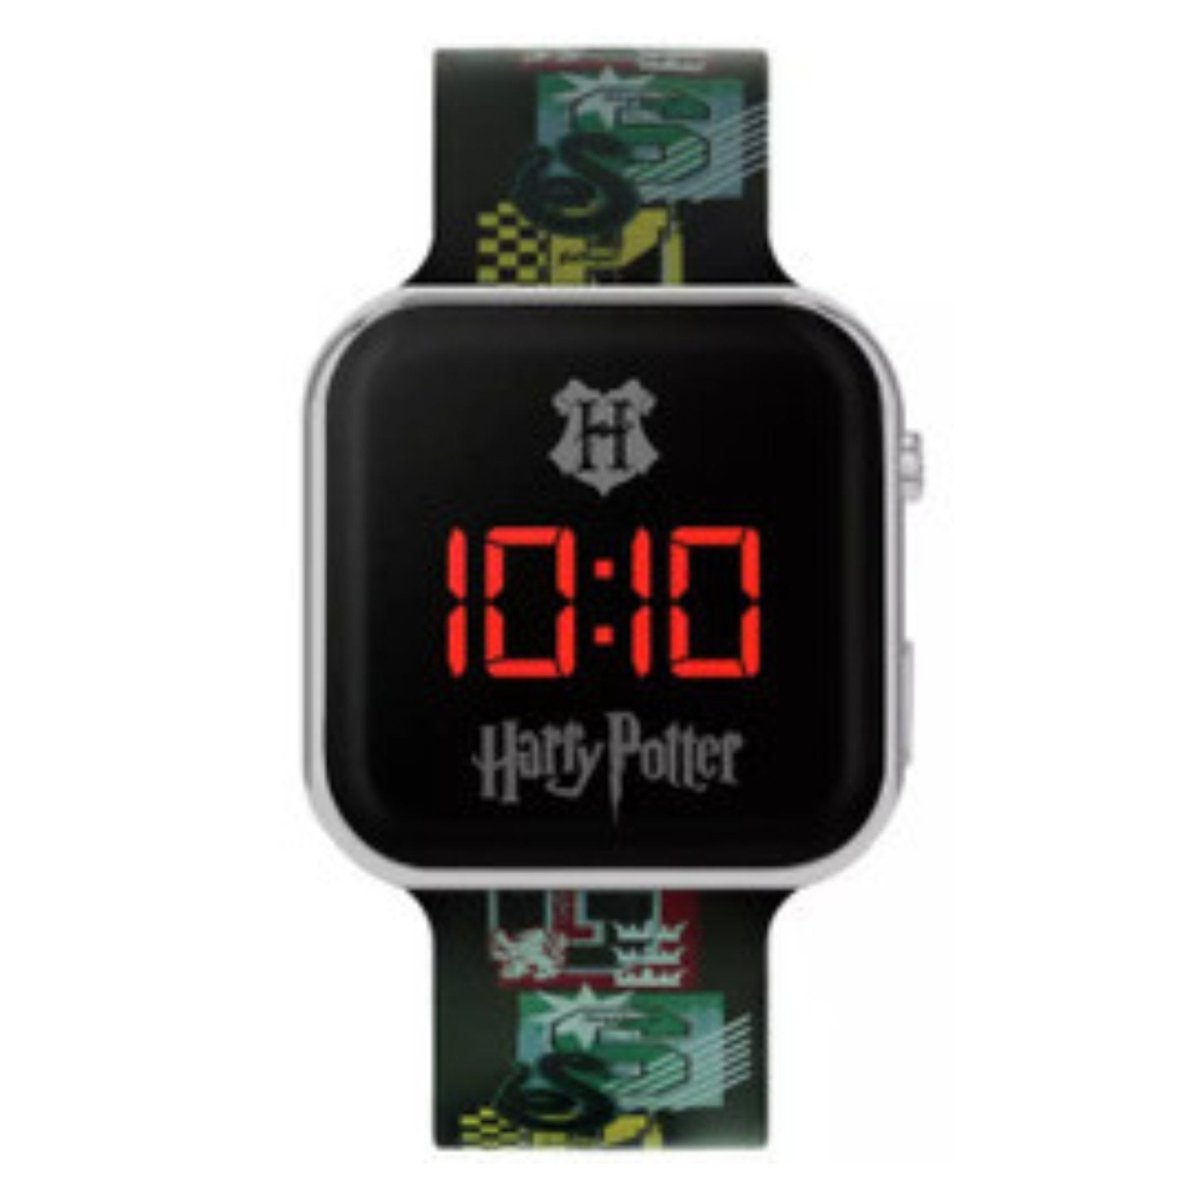 Harry Potter LED watch - Kids Party Craft